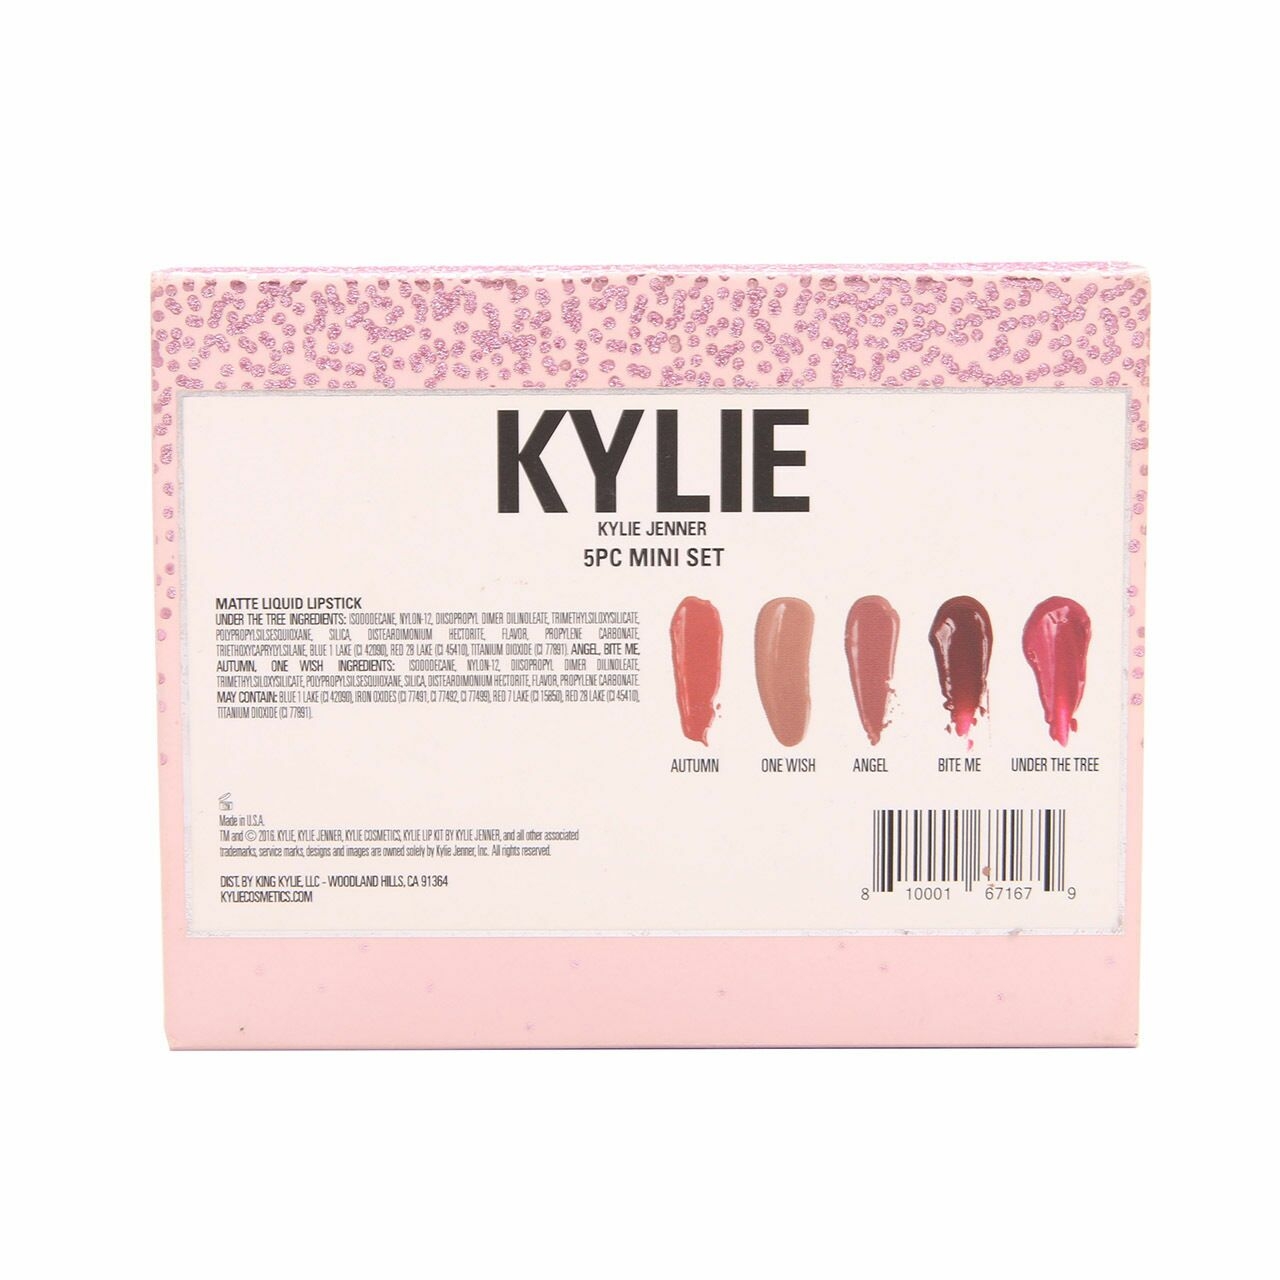 KYLIE 5pc Mini Set Collection Lips